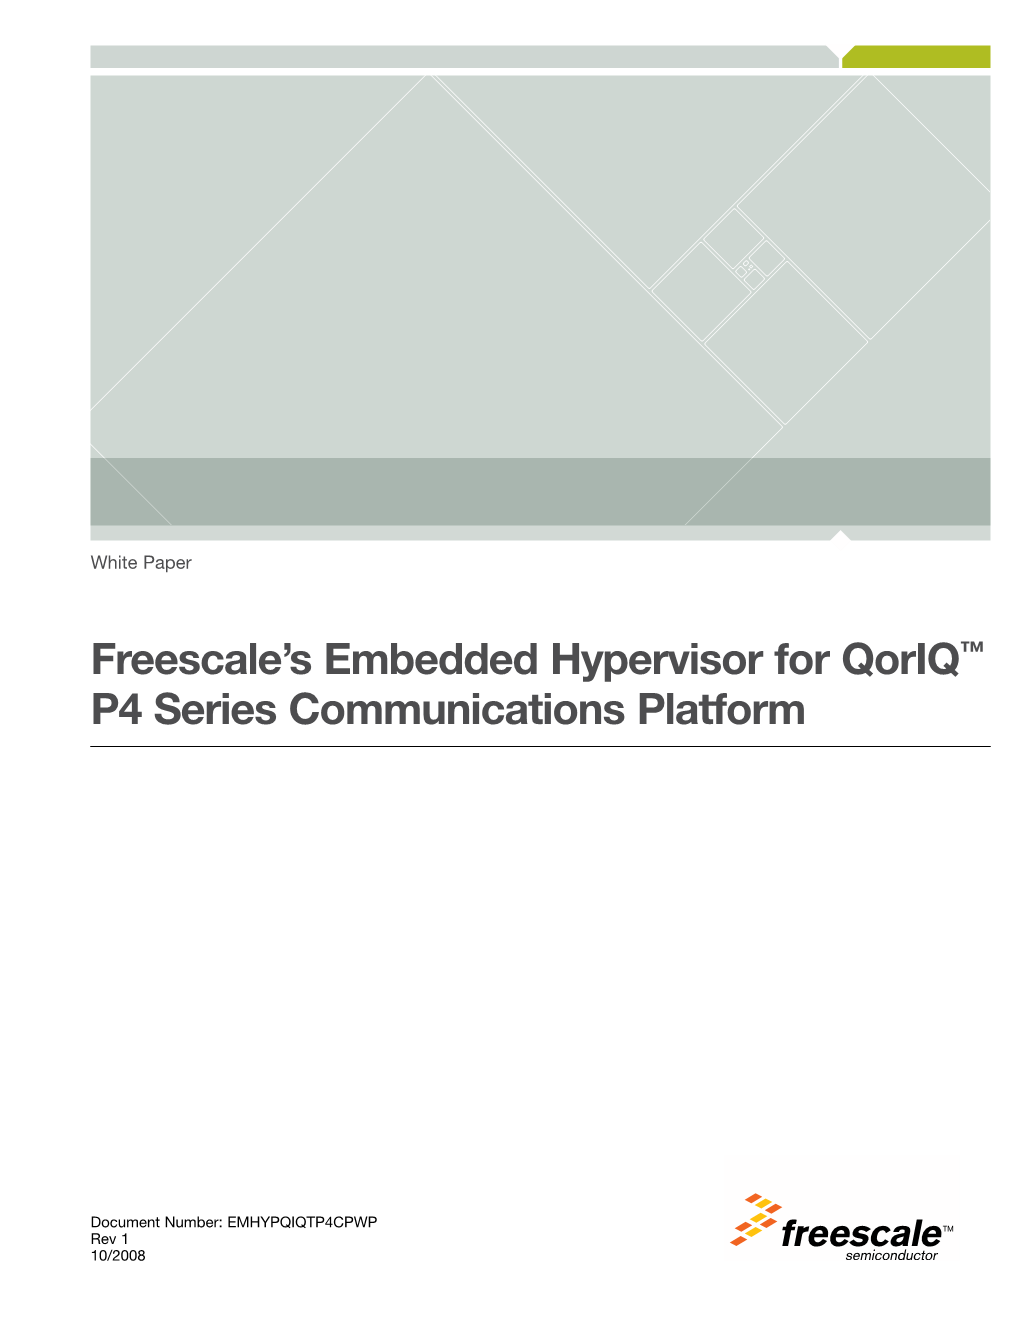 Freescale's Embedded Hypervisor for Qoriq™ P4 Series Communications